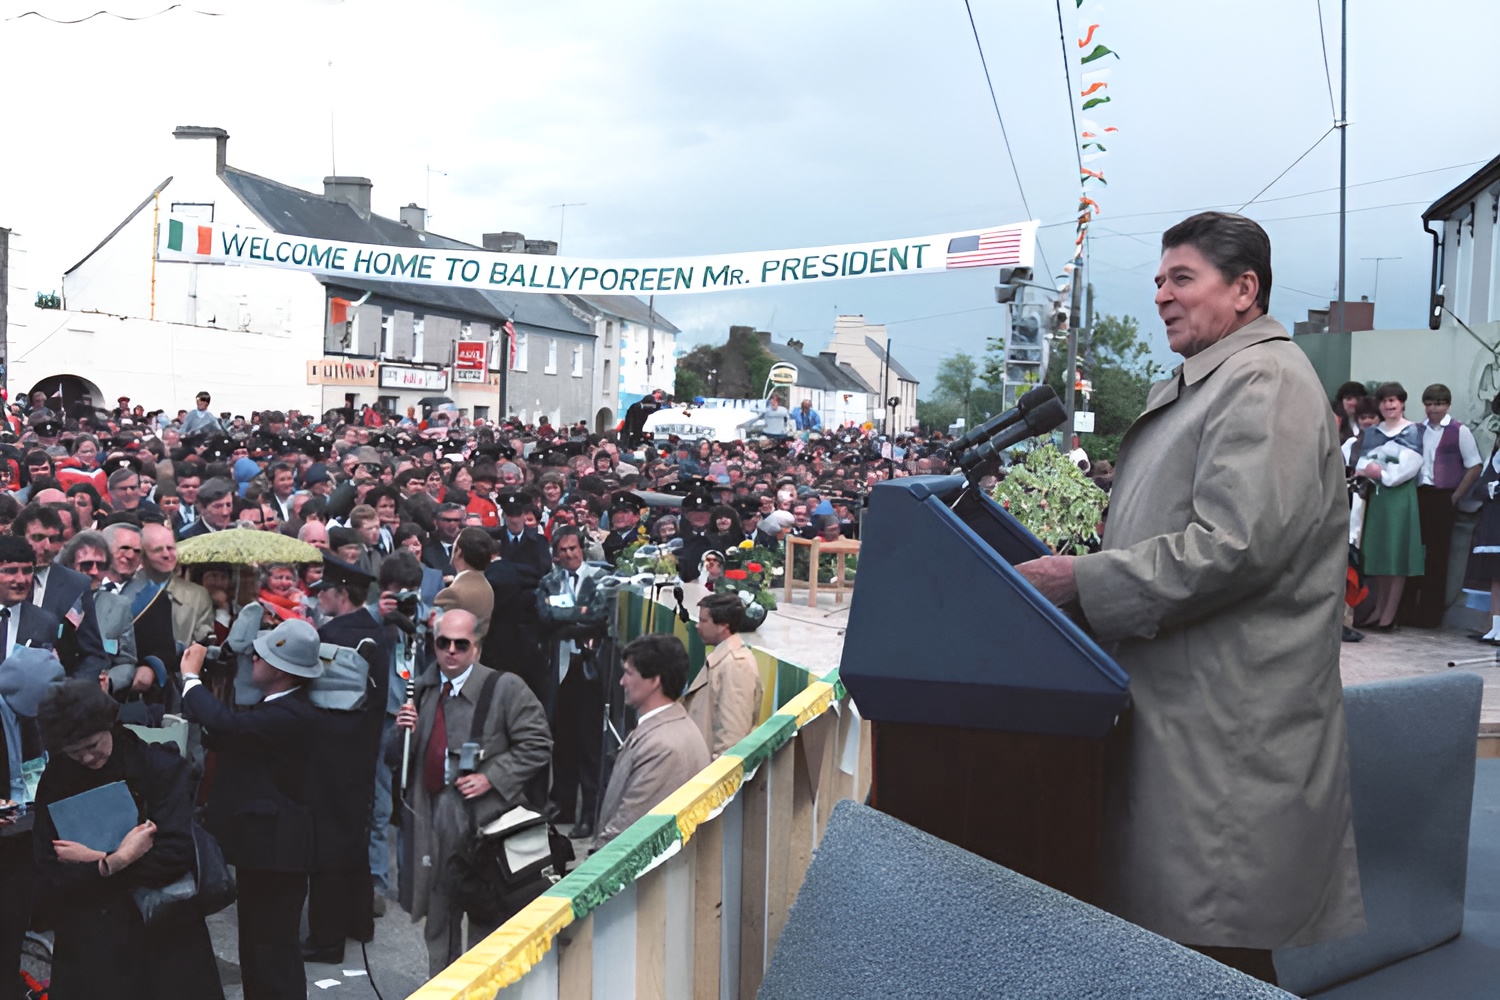 Ronald Reagan in Ireland, 1984